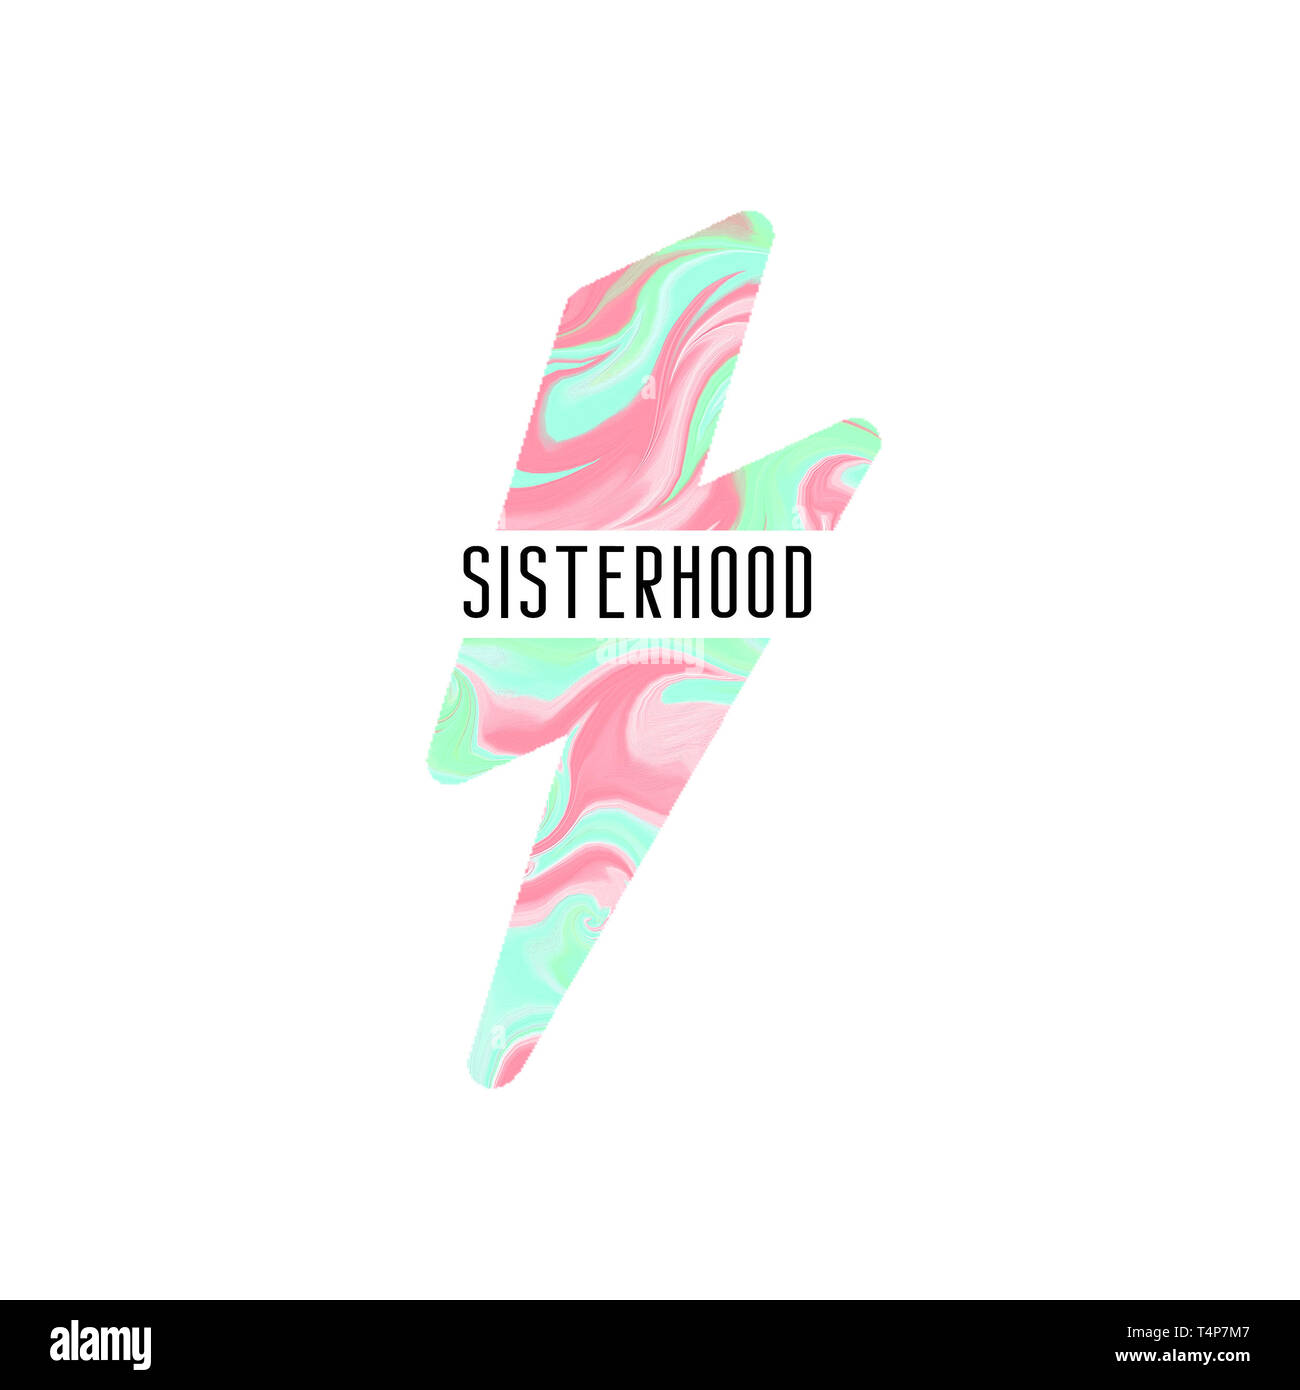 Sisterhood. Thunder symbol in holographic background. Feminism sign. Stock Photo